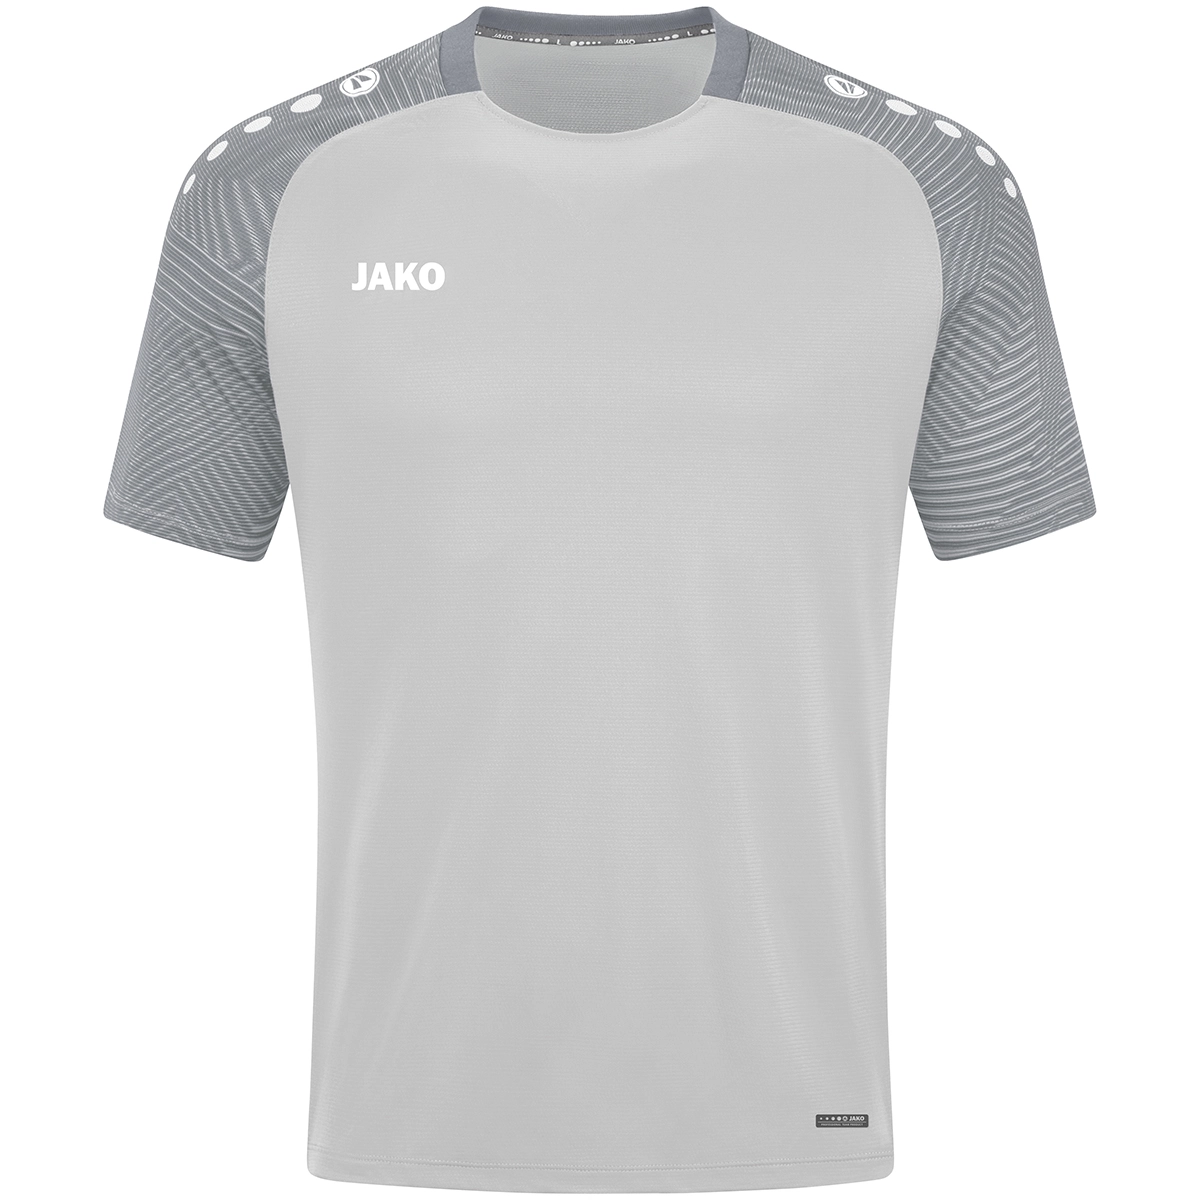 JAKO T_Shirt_Performance A4T011VK6122 845 soft grey/steingrau